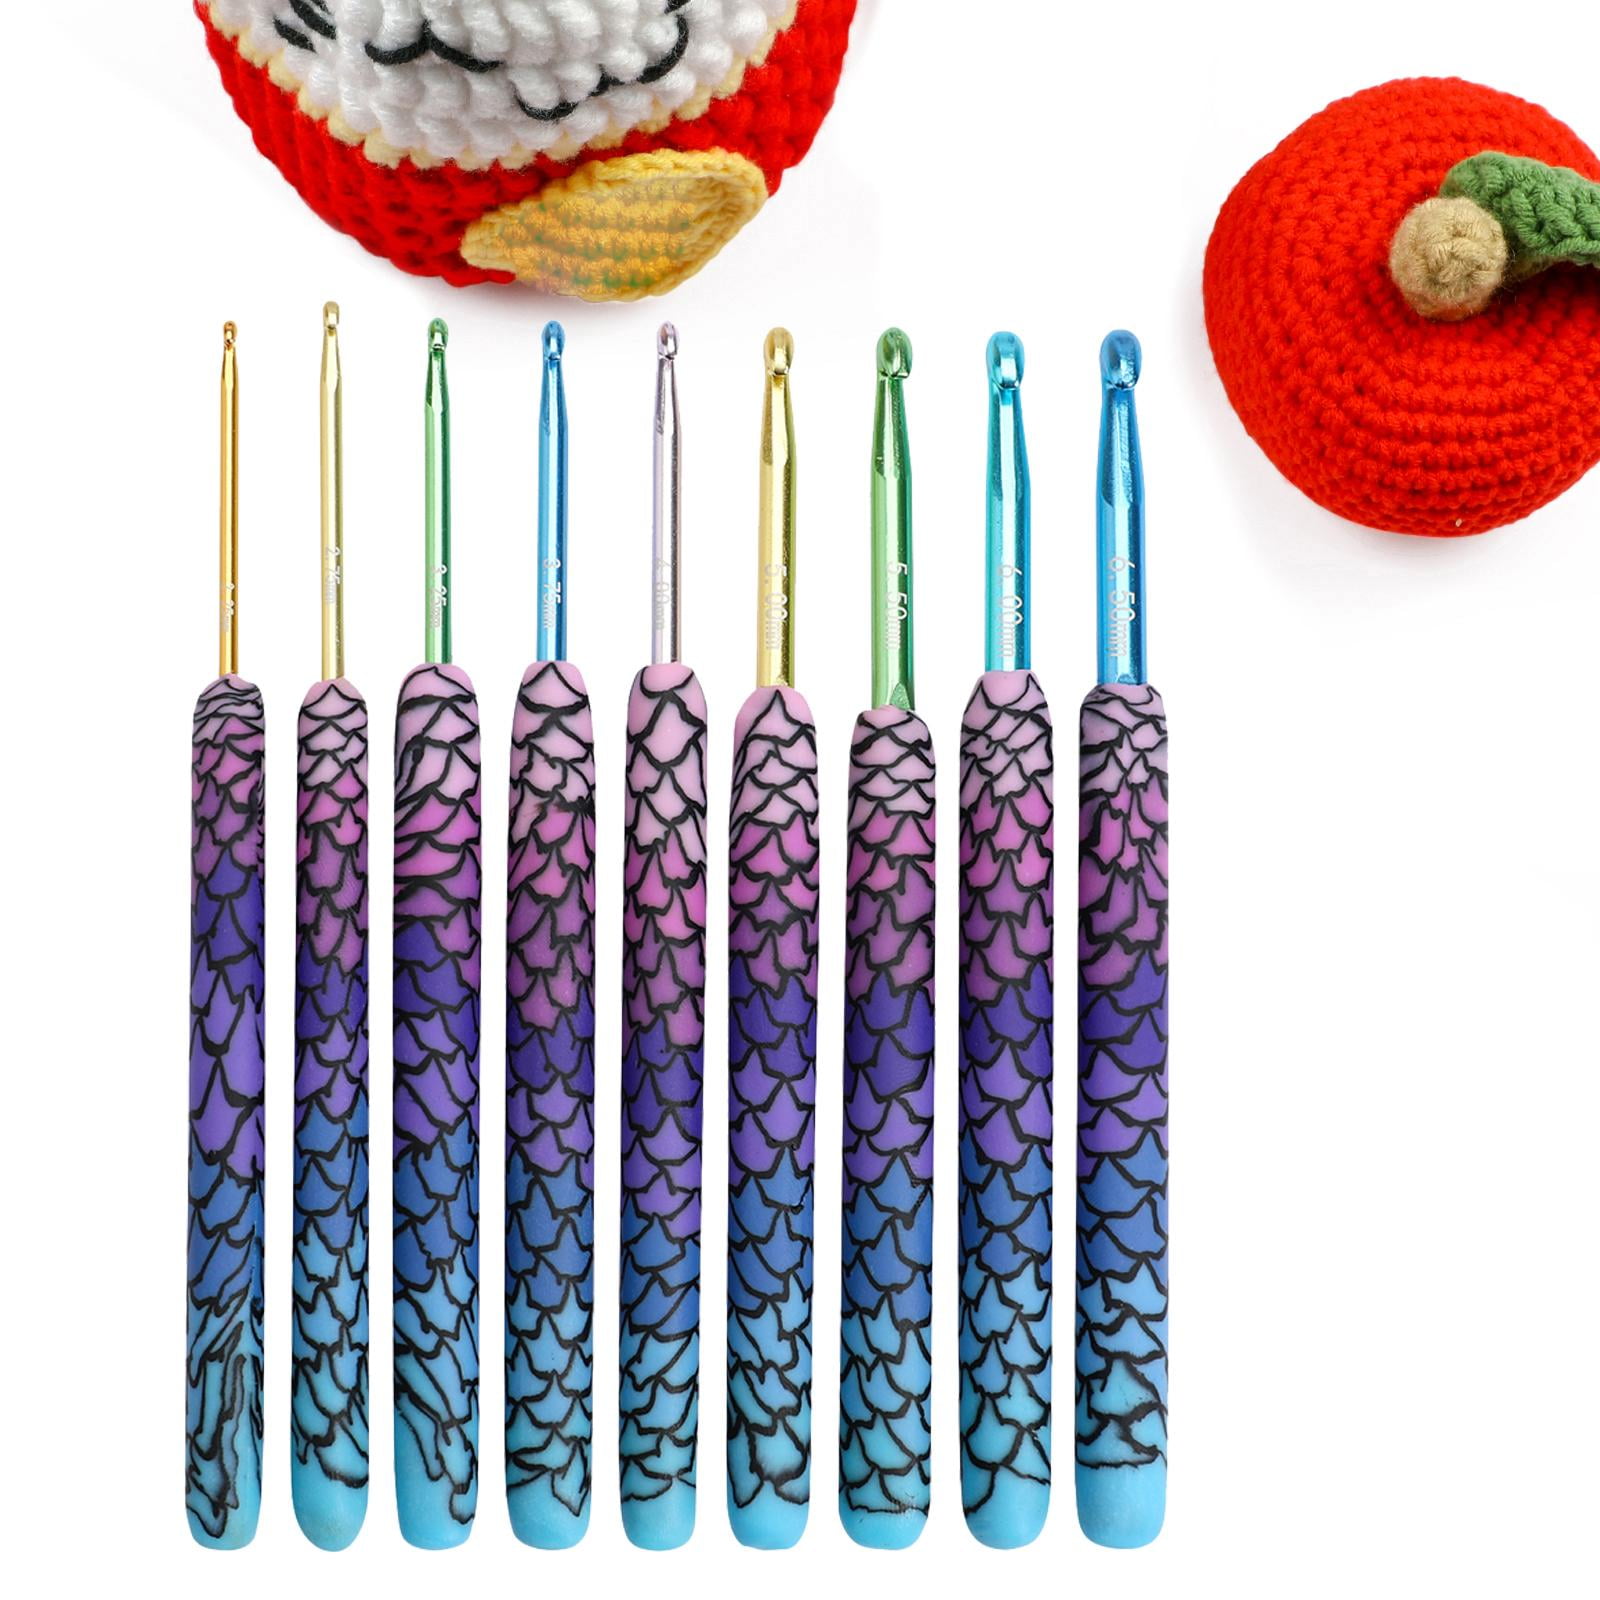 Crochet Hook Set.Ergonomic Crochet Soft Handles 6mm Mermaid